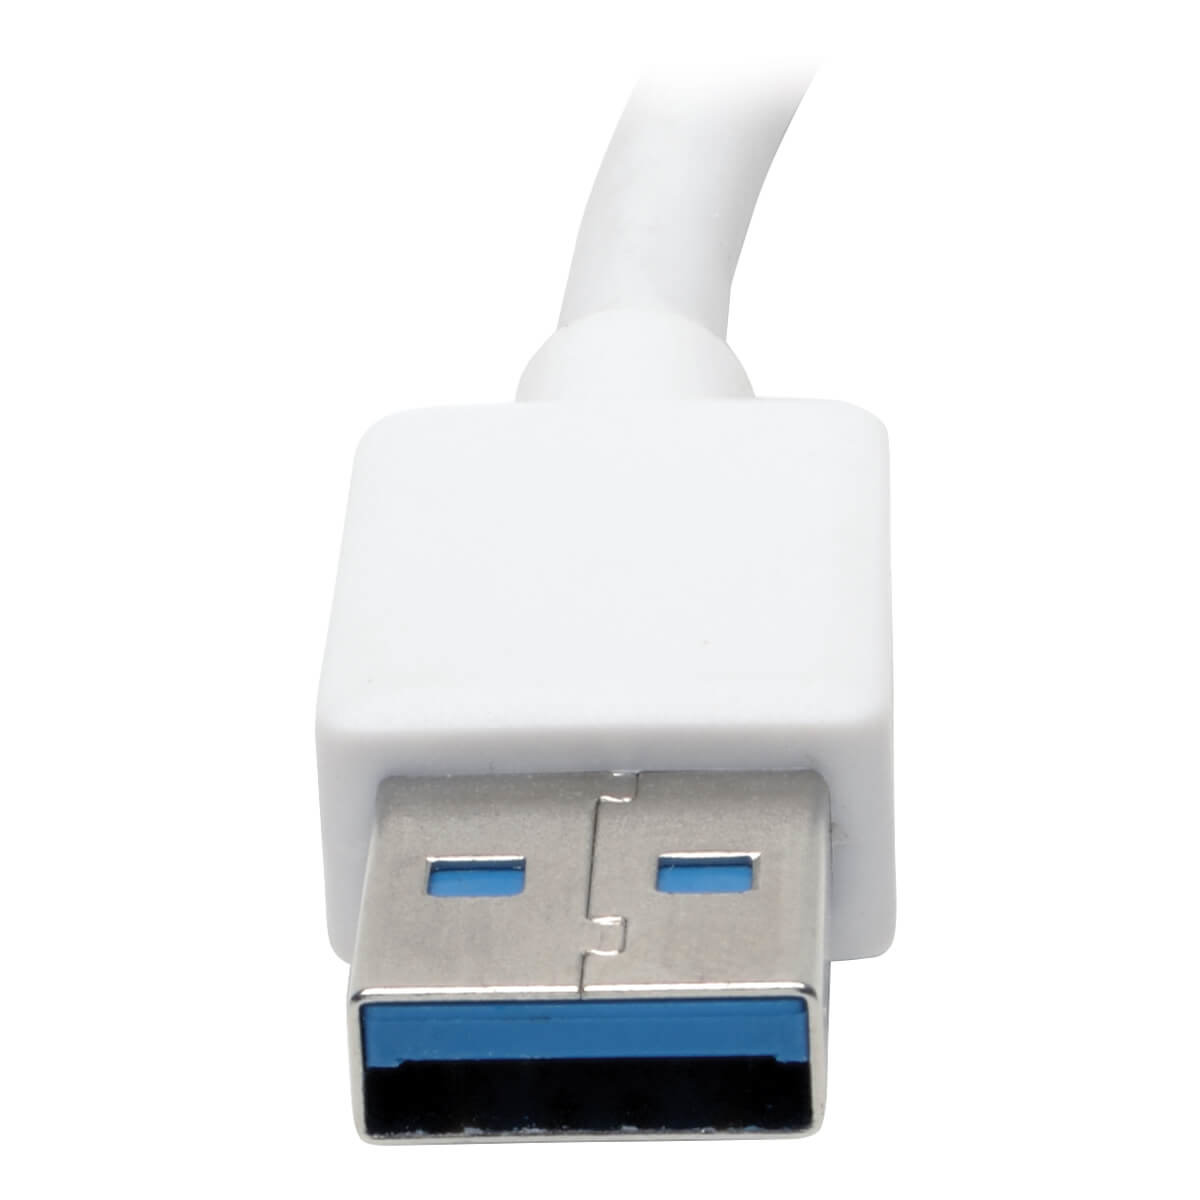 USB 3.0 SuperSpeed to Gigabit Adapter